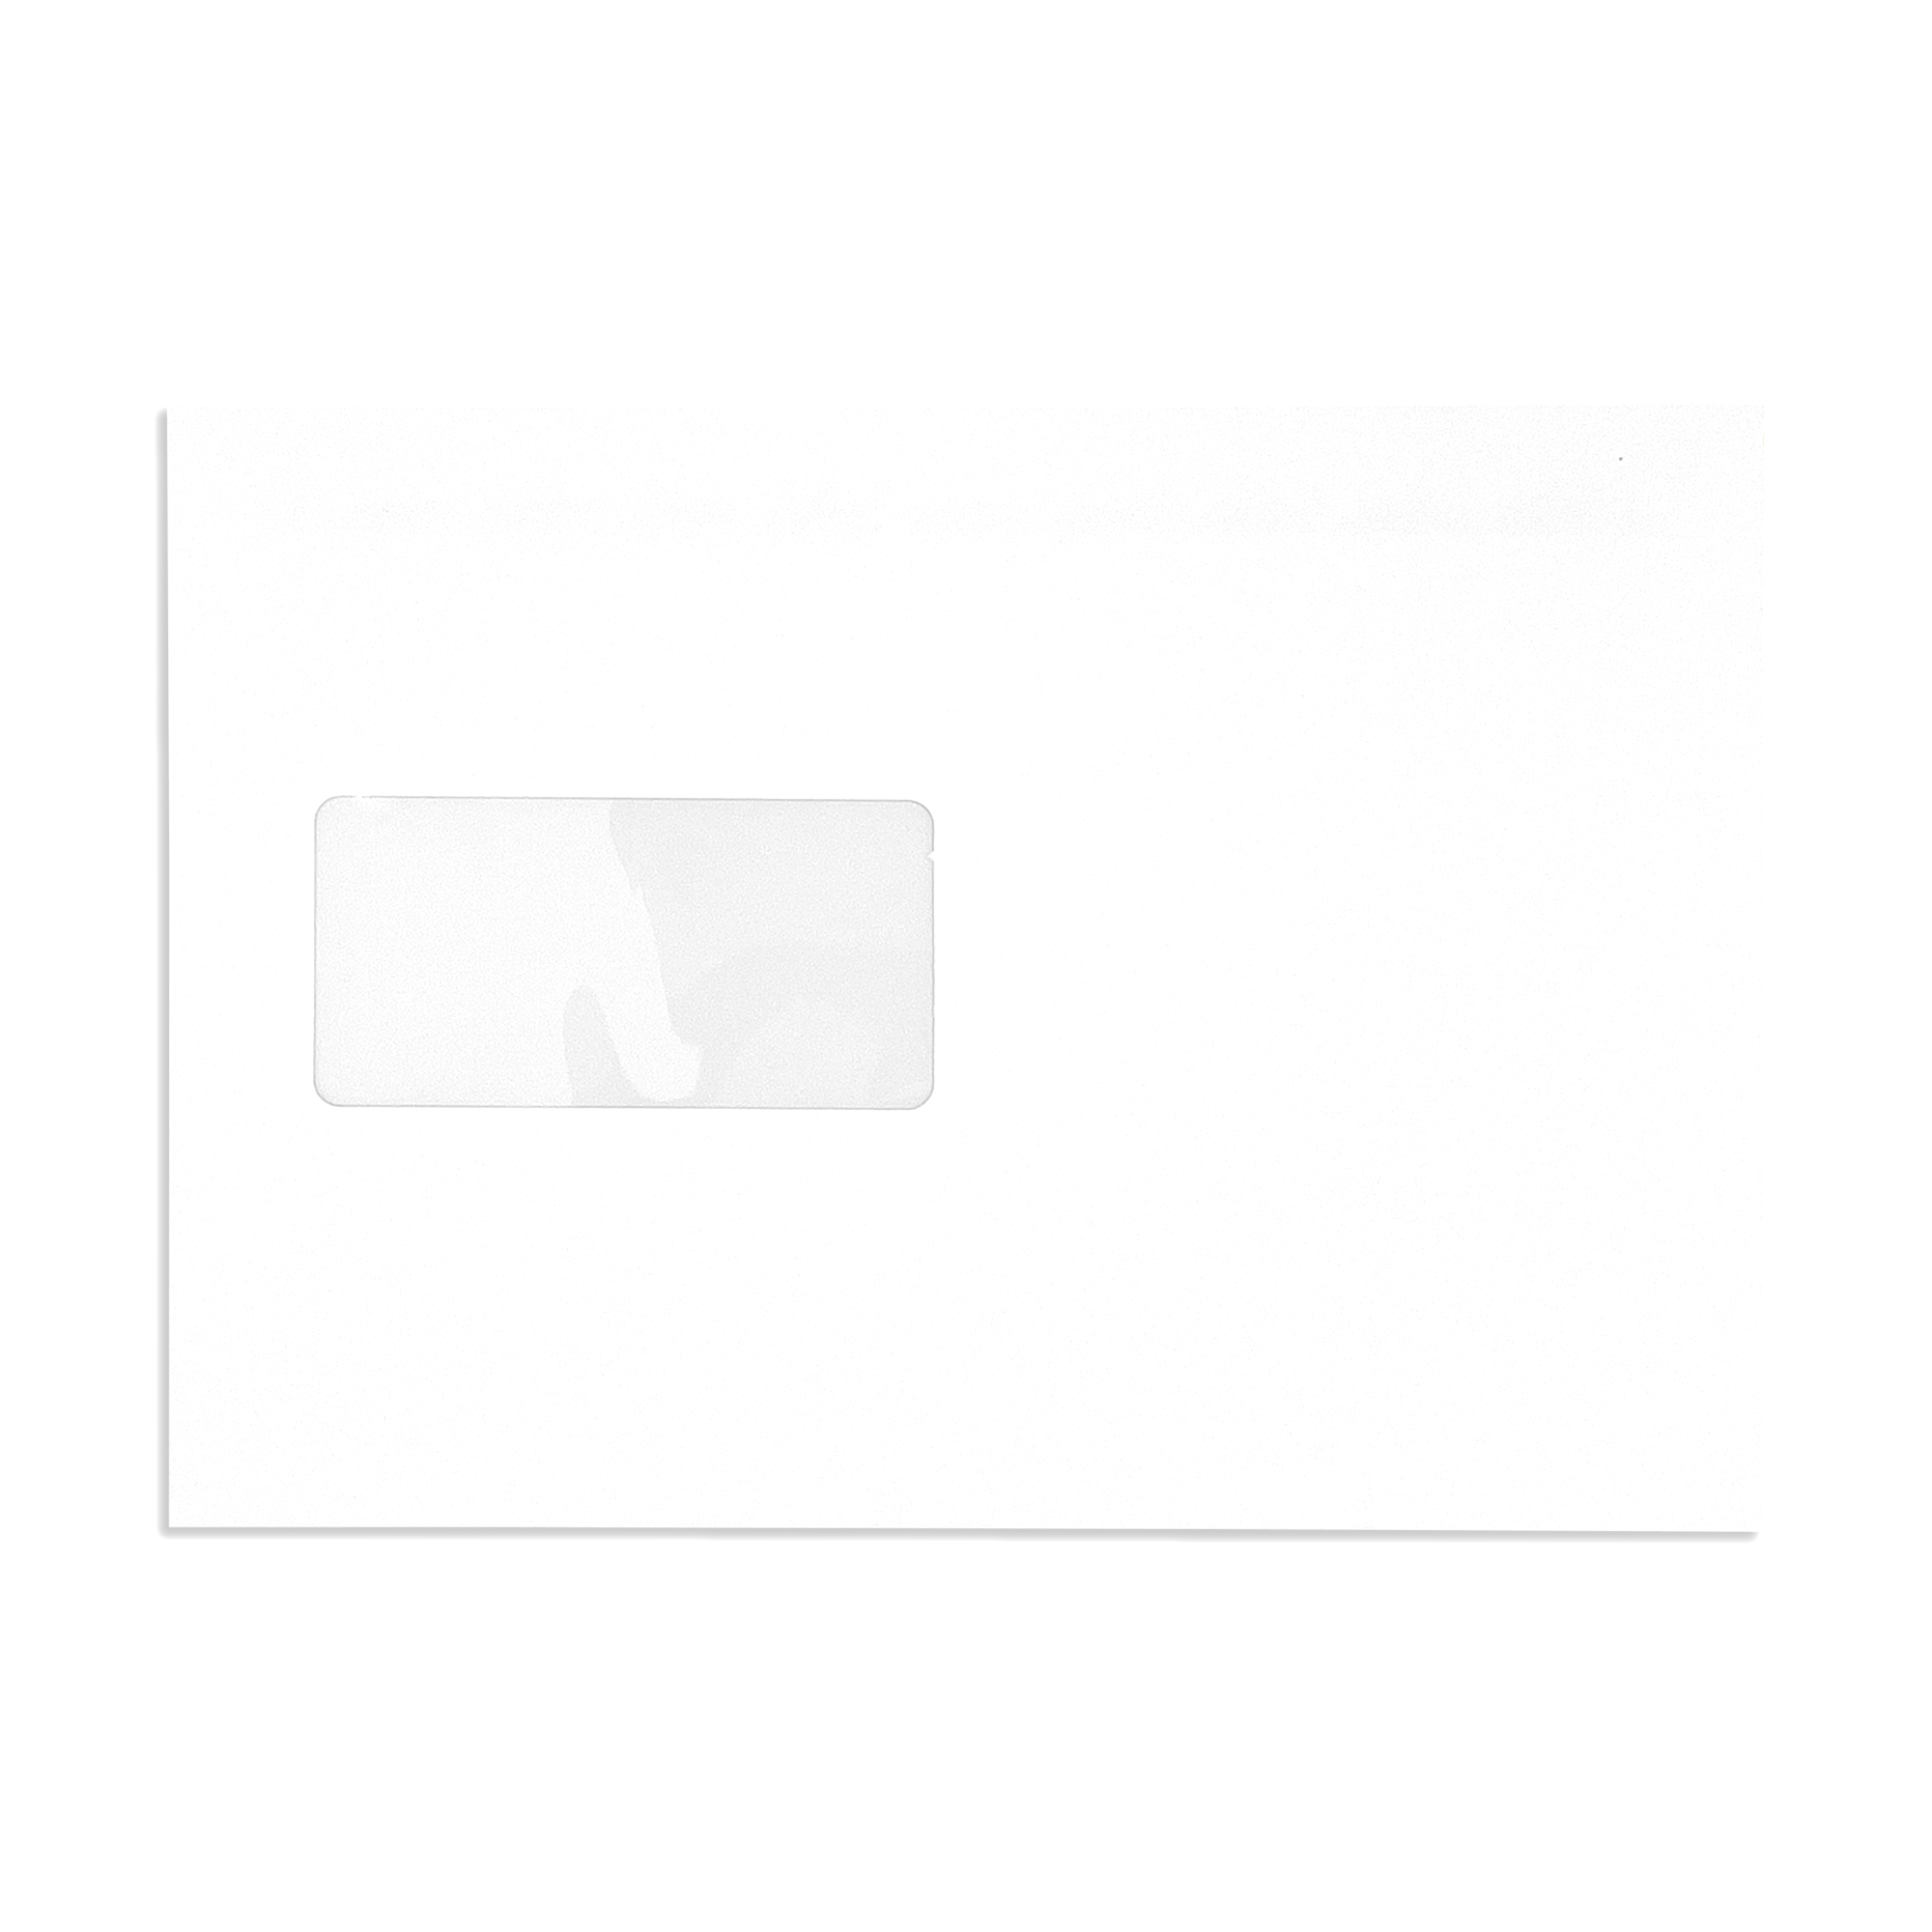 c5-window-high-white-120gsm-wallet-envelopes-front